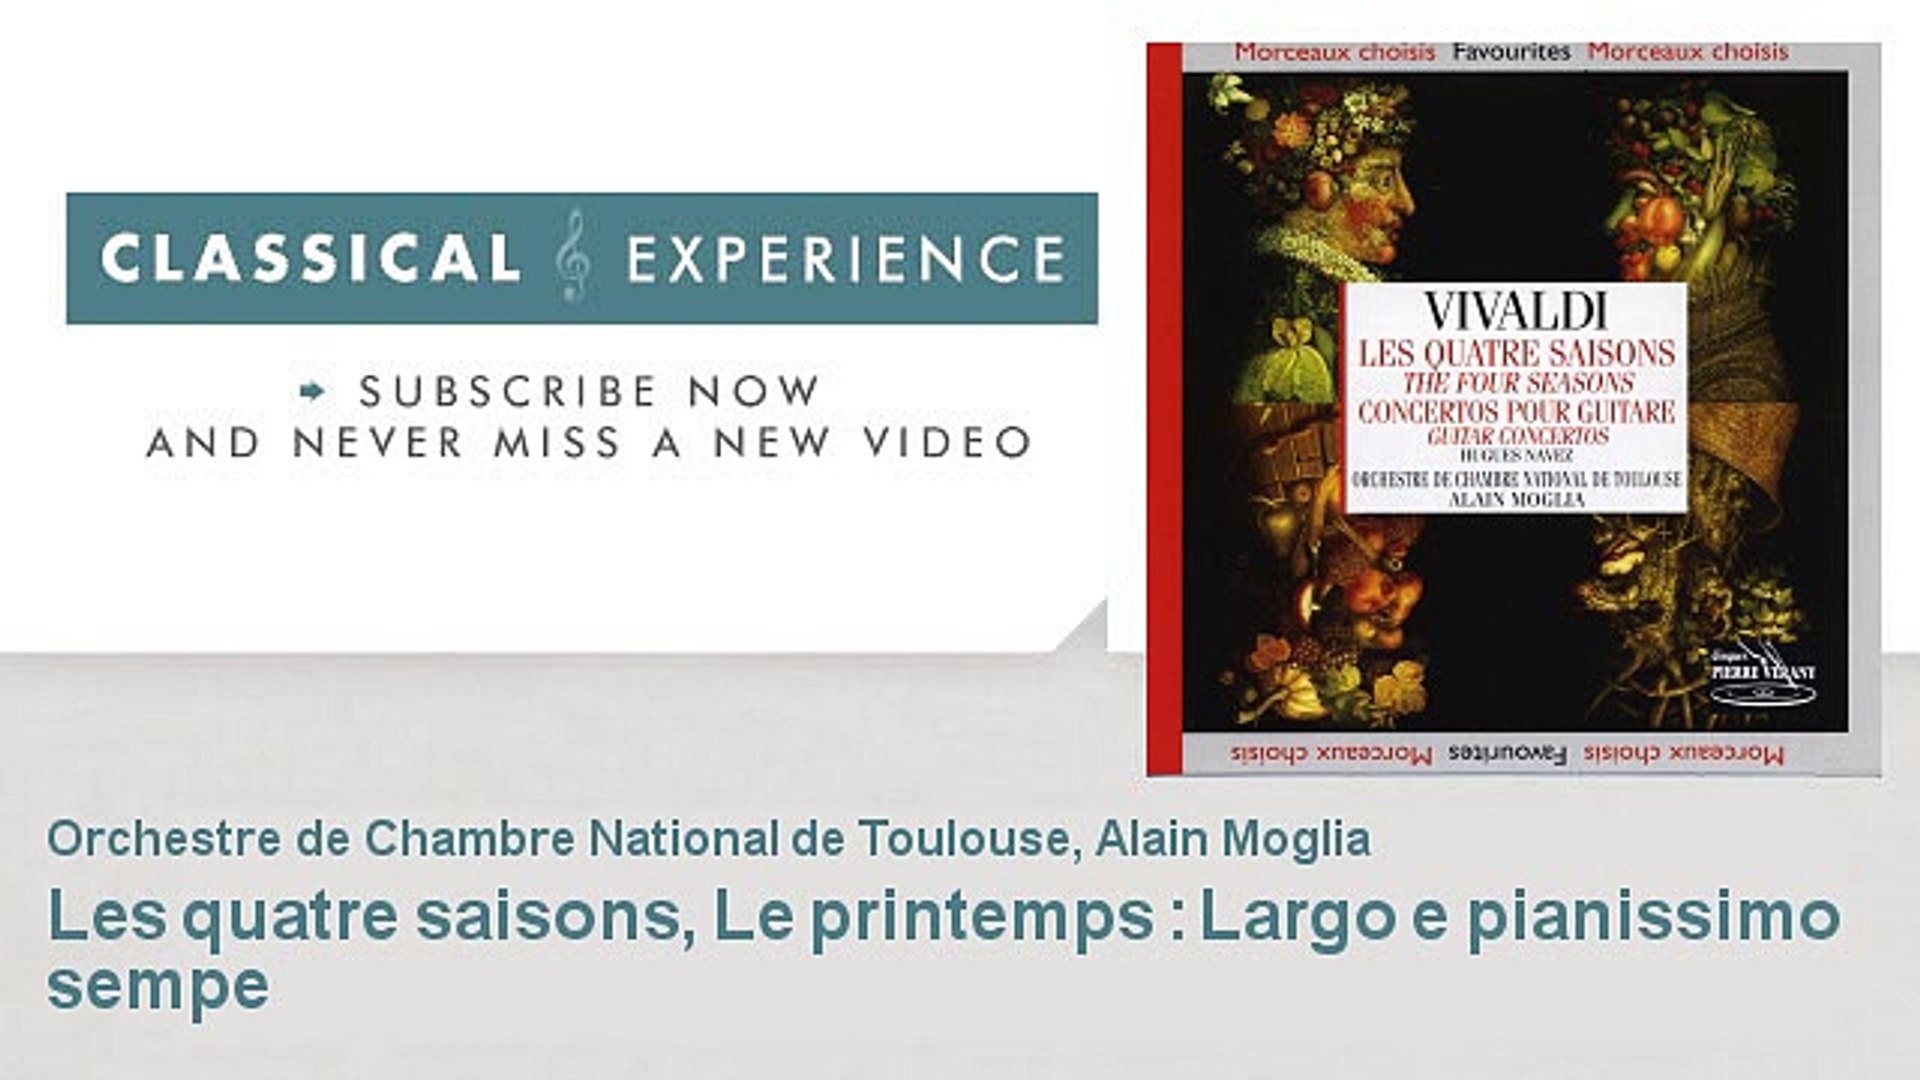 Antonio vivaldi : Les quatre saisons, Le printemps : Largo e pianissimo  sempe - Vidéo Dailymotion